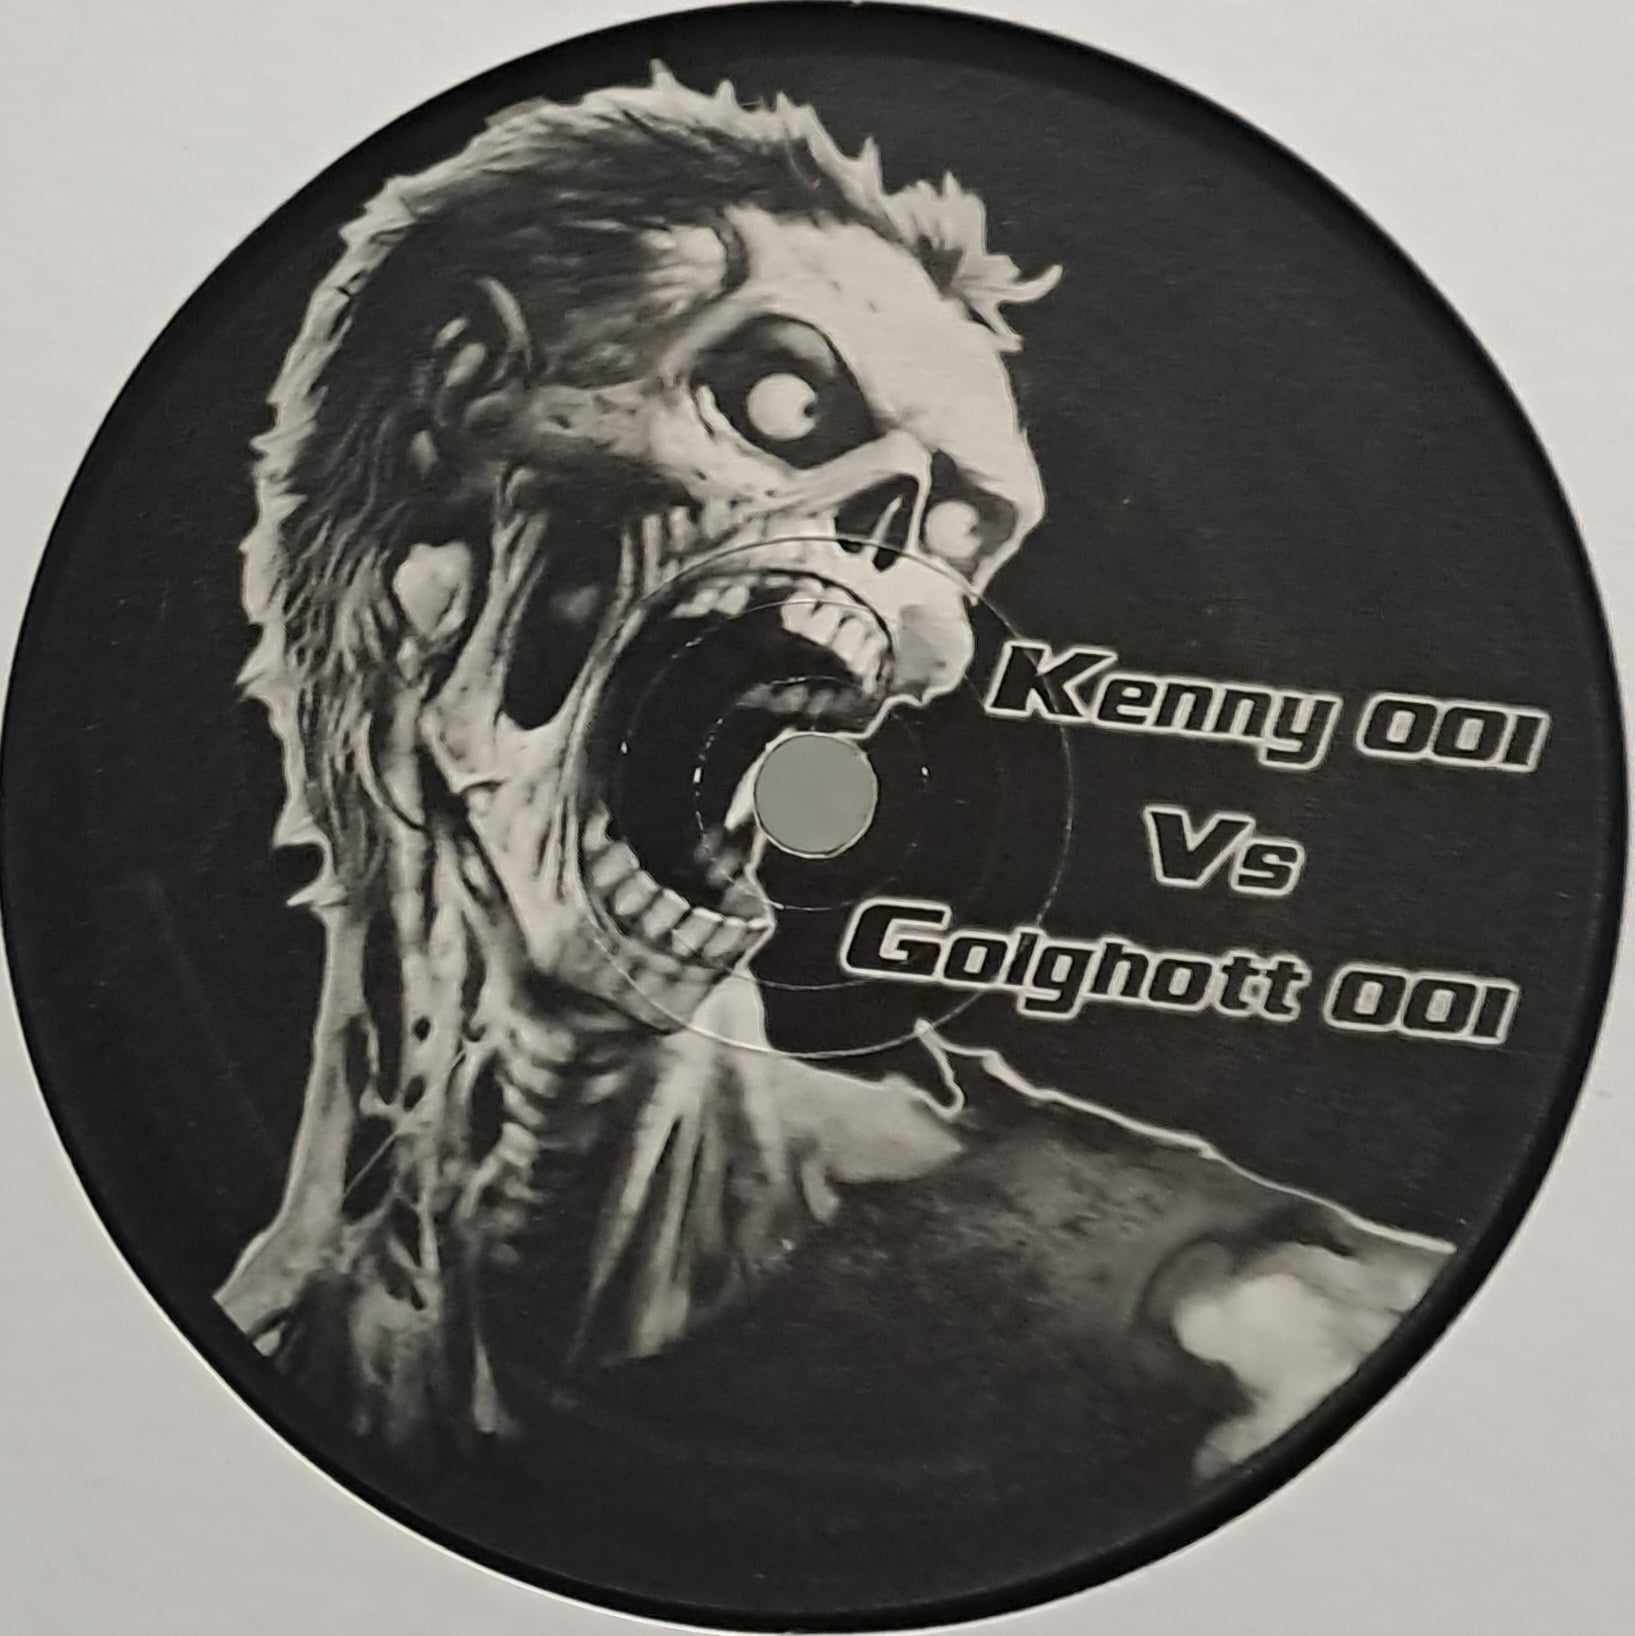 Kin Golghott LTD 01 - vinyle hardcore